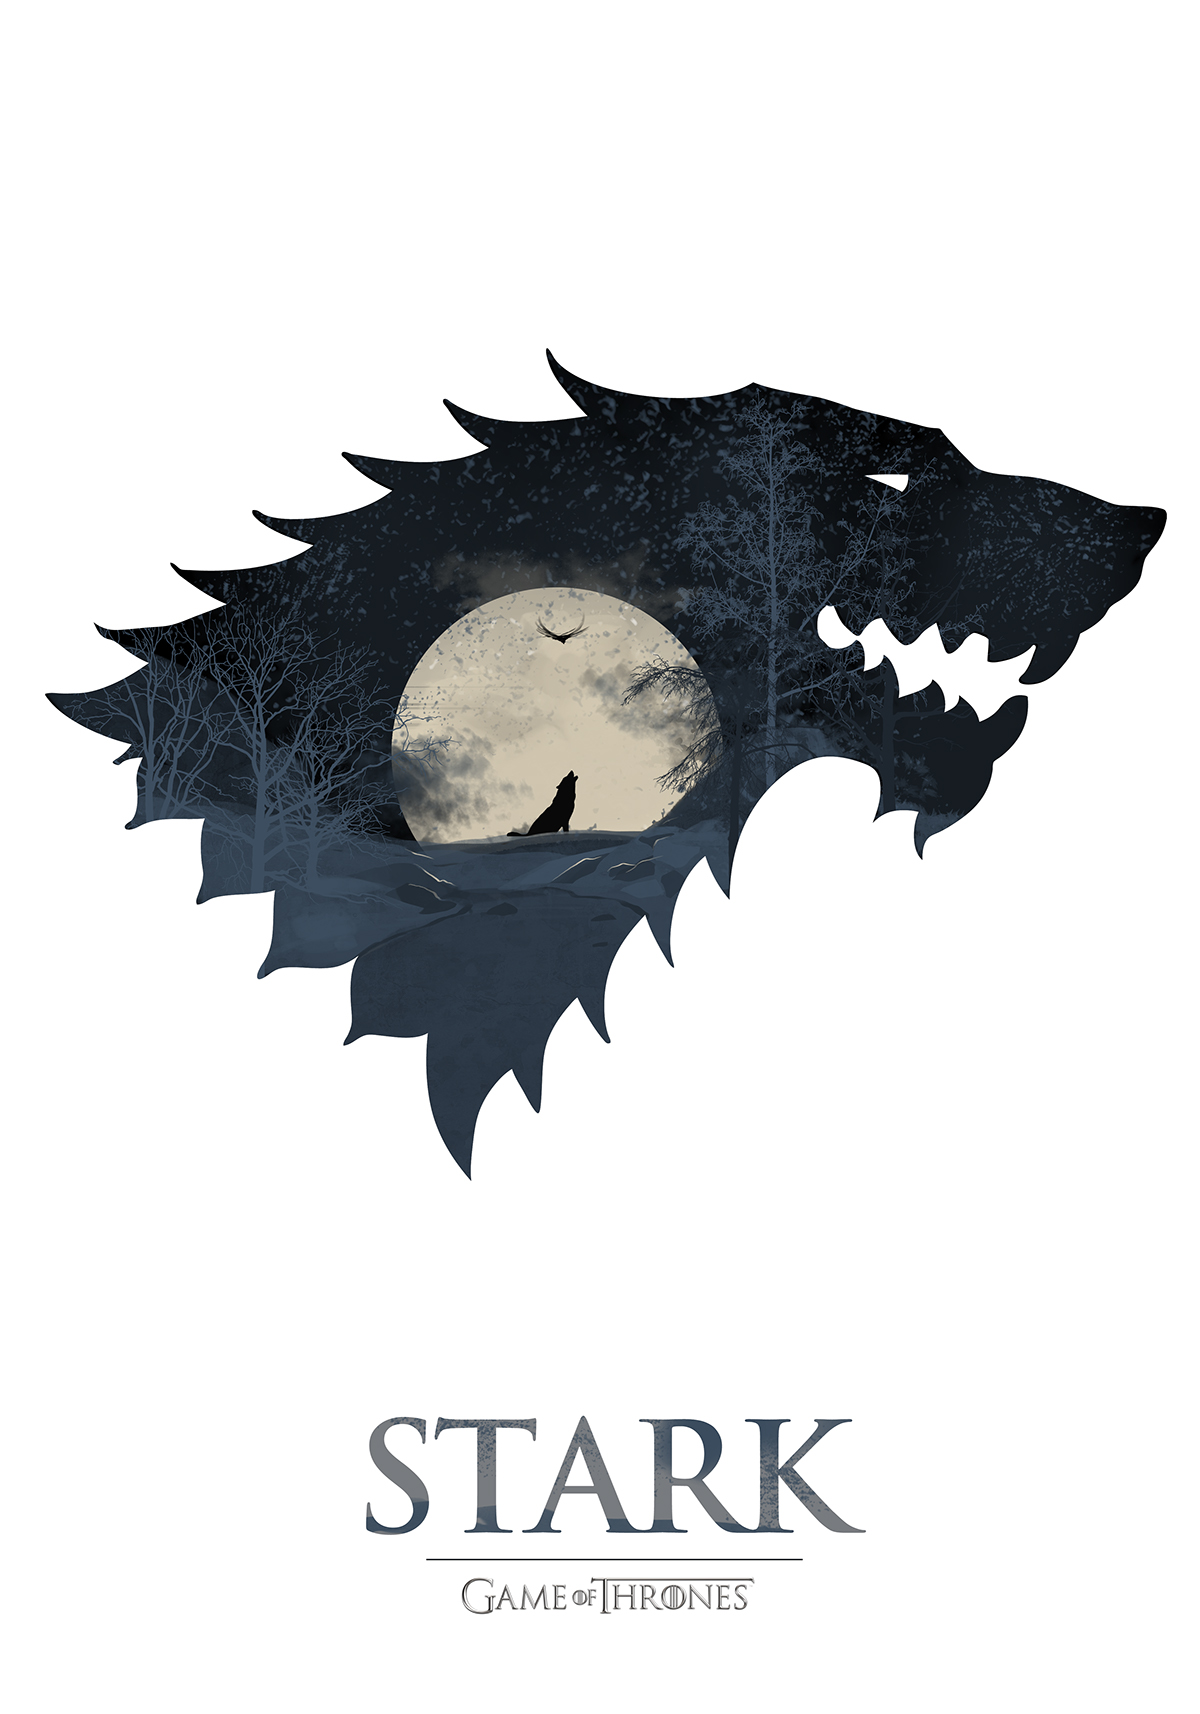 Game of Thrones clans poster Icon print prints artwork Starck targaryen lannister tv series series tv Episode vector